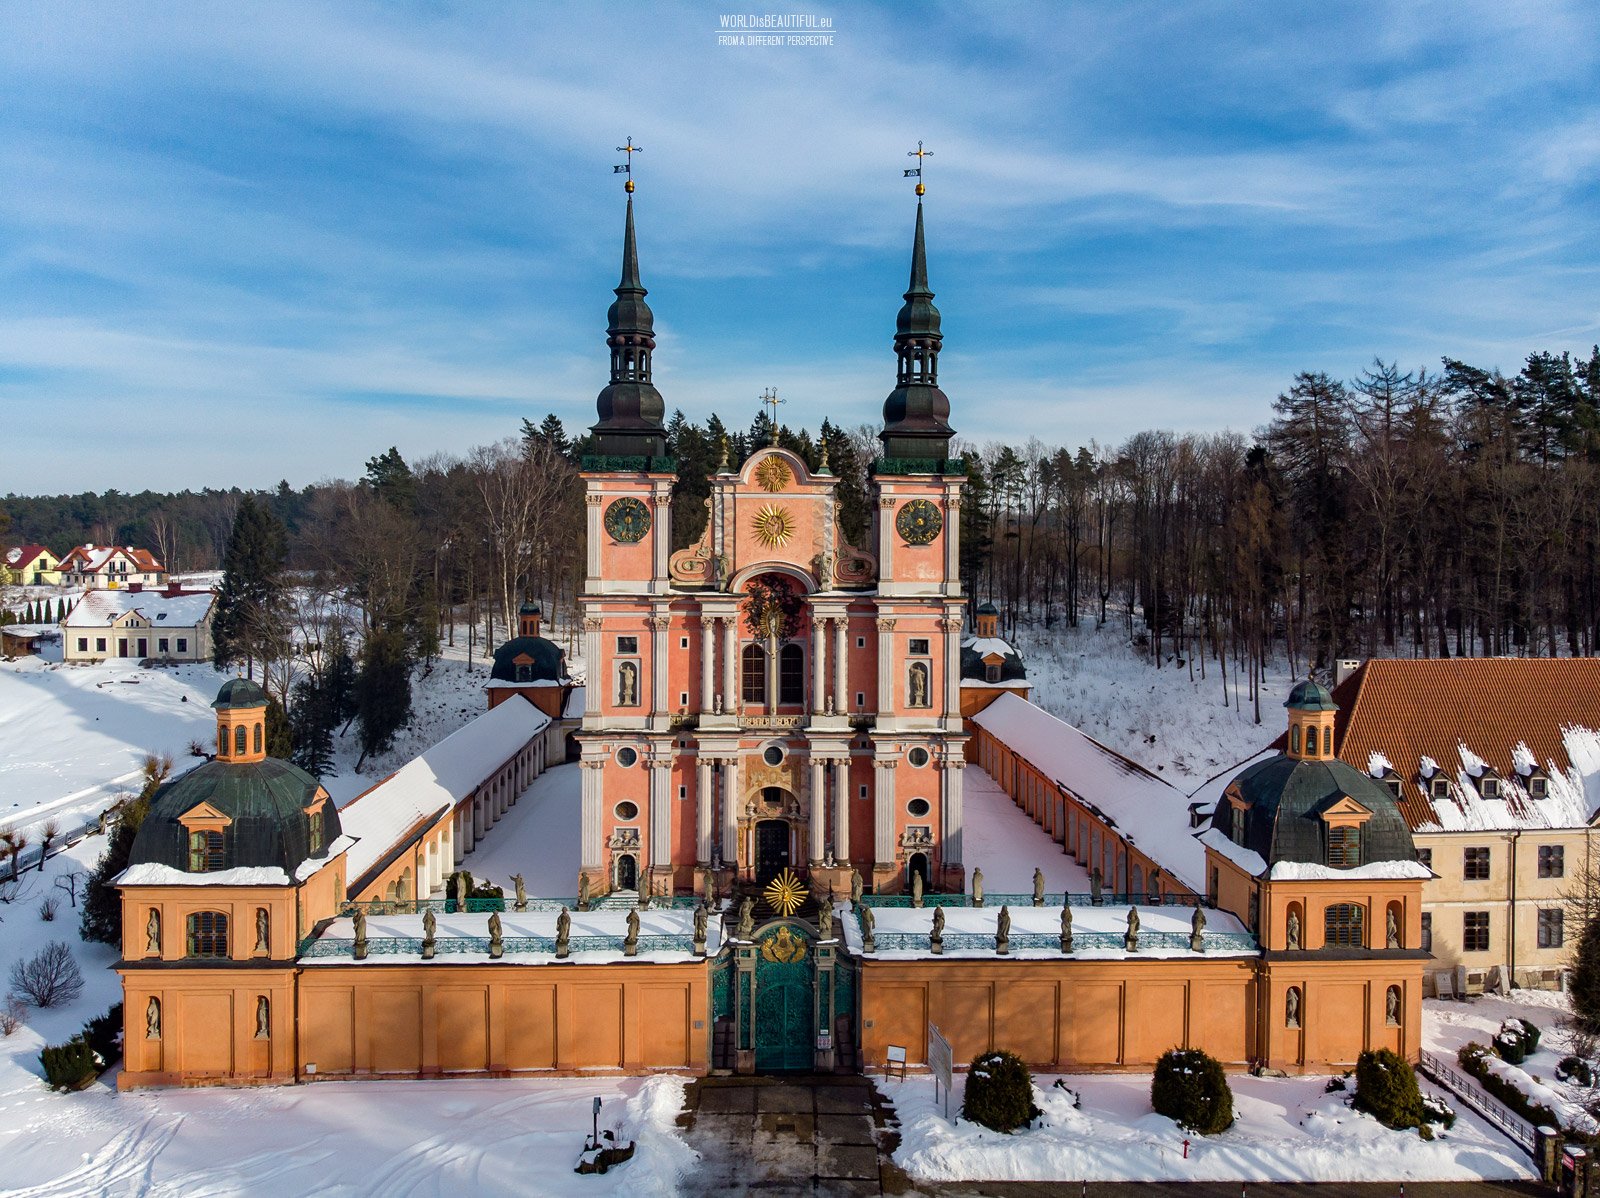 Basilica in winter